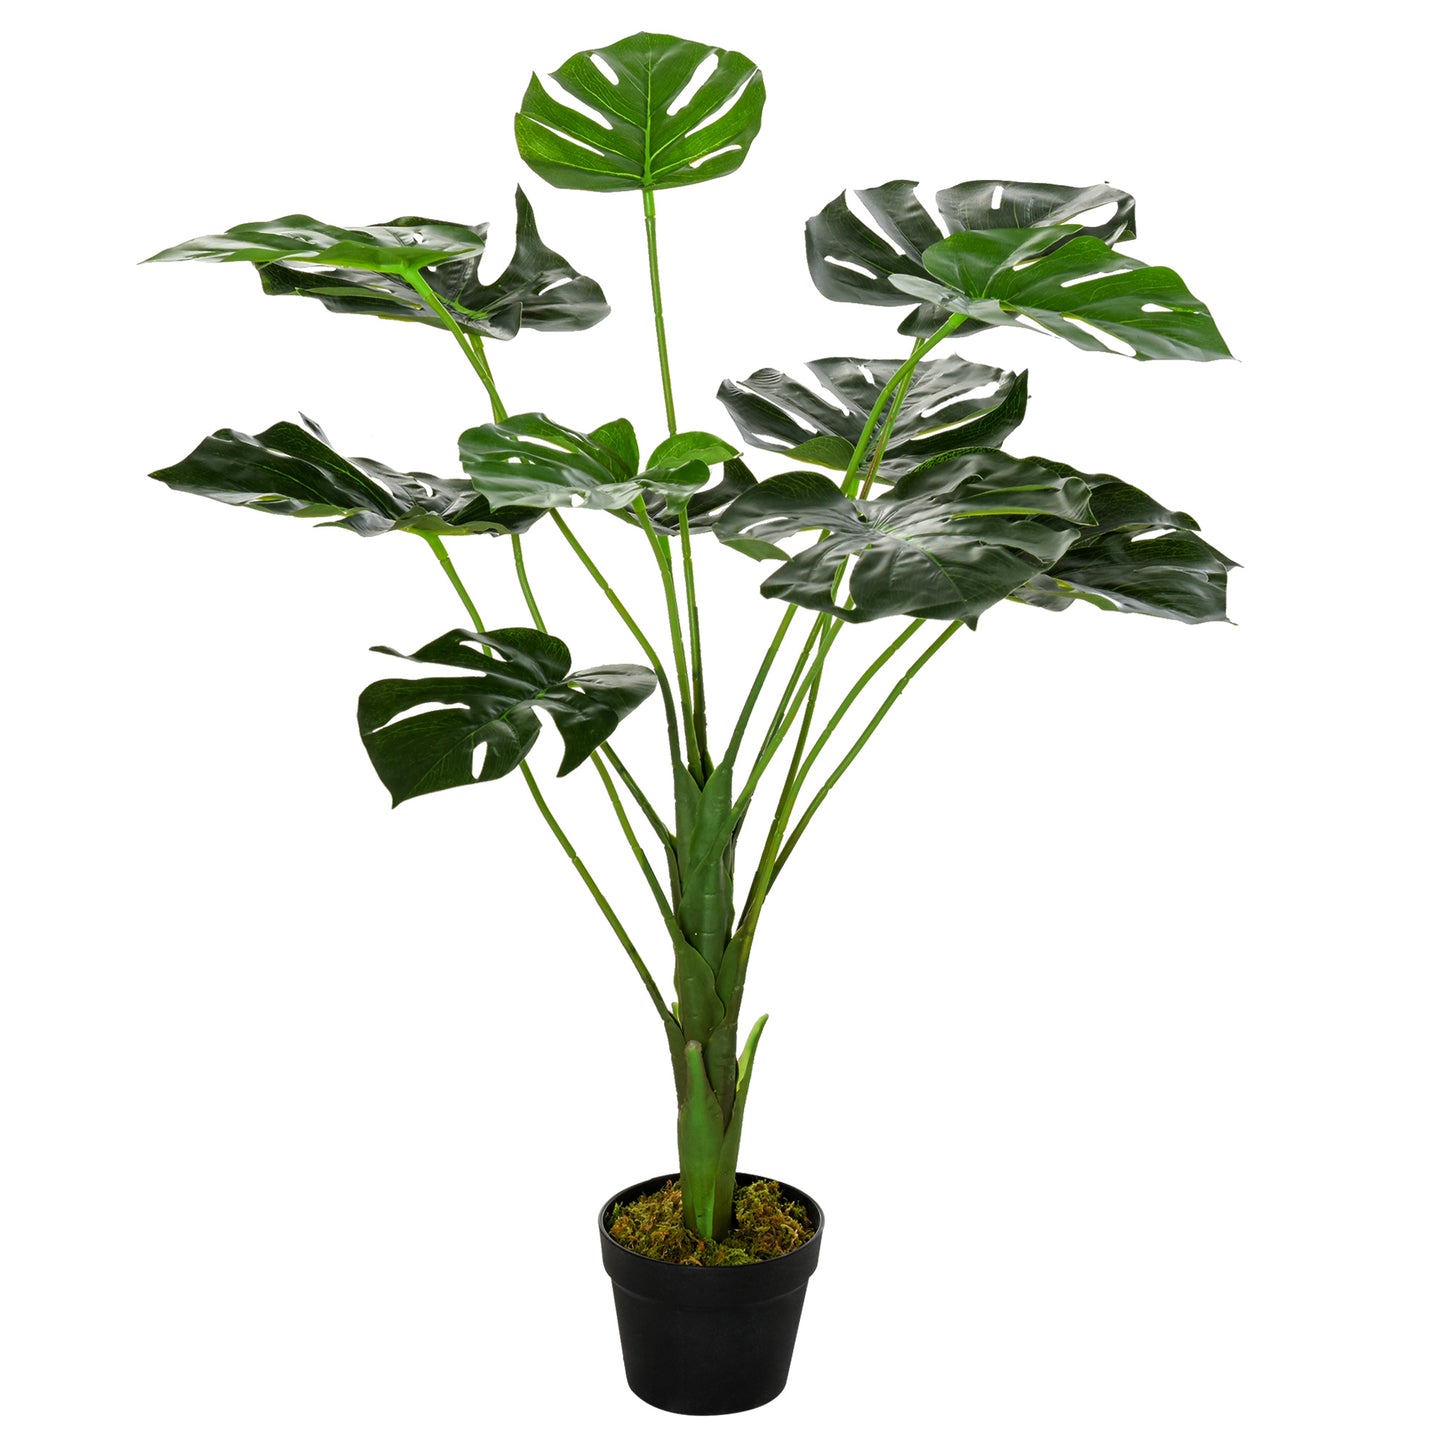 HOMCOM Decorative Artificial Monstera Plants in Pot Fake Plants for Home Indoor Outdoor Decor, 85cm